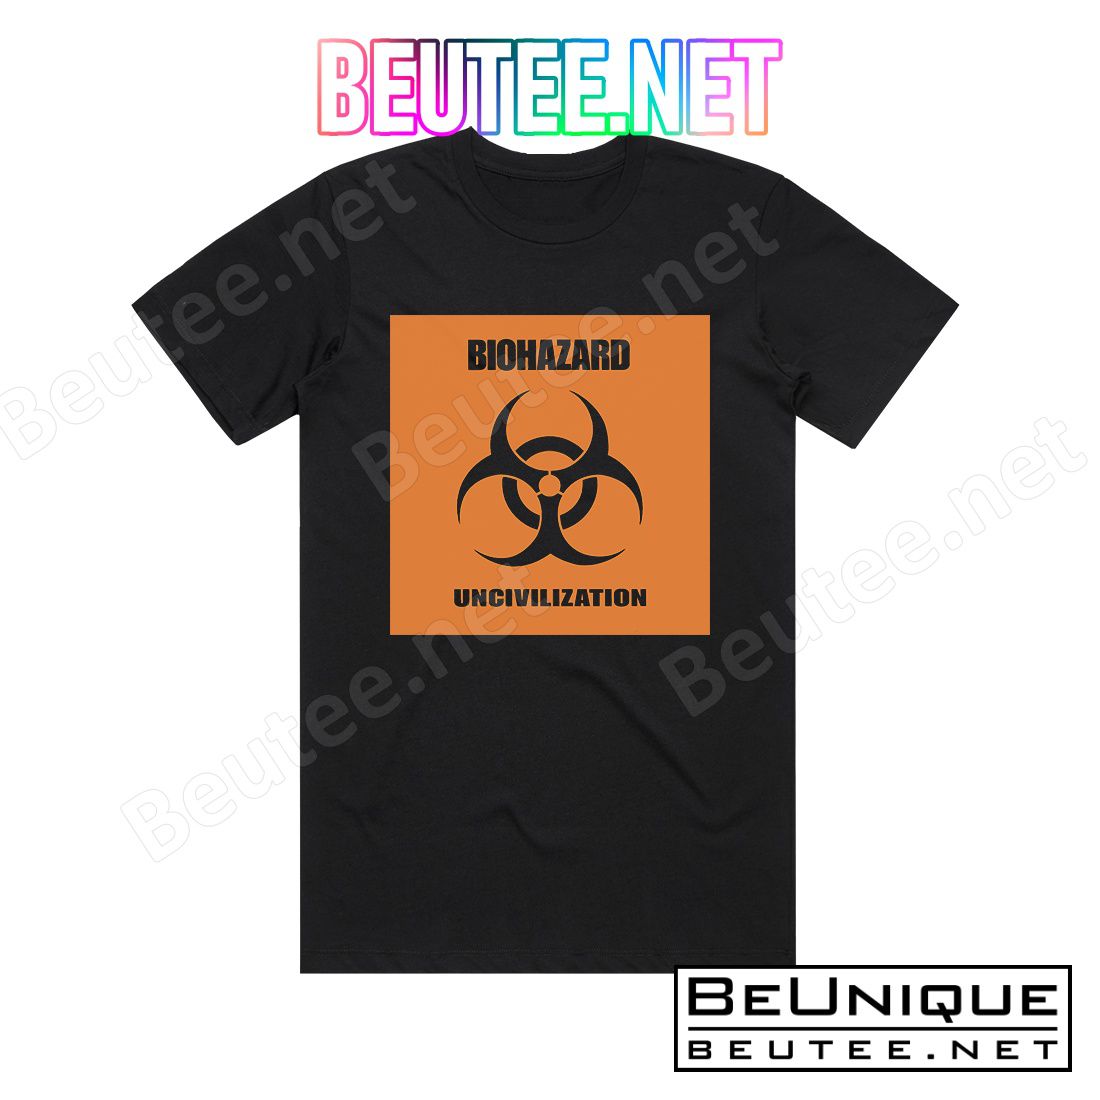 Biohazard Uncivilization Album Cover T-Shirt